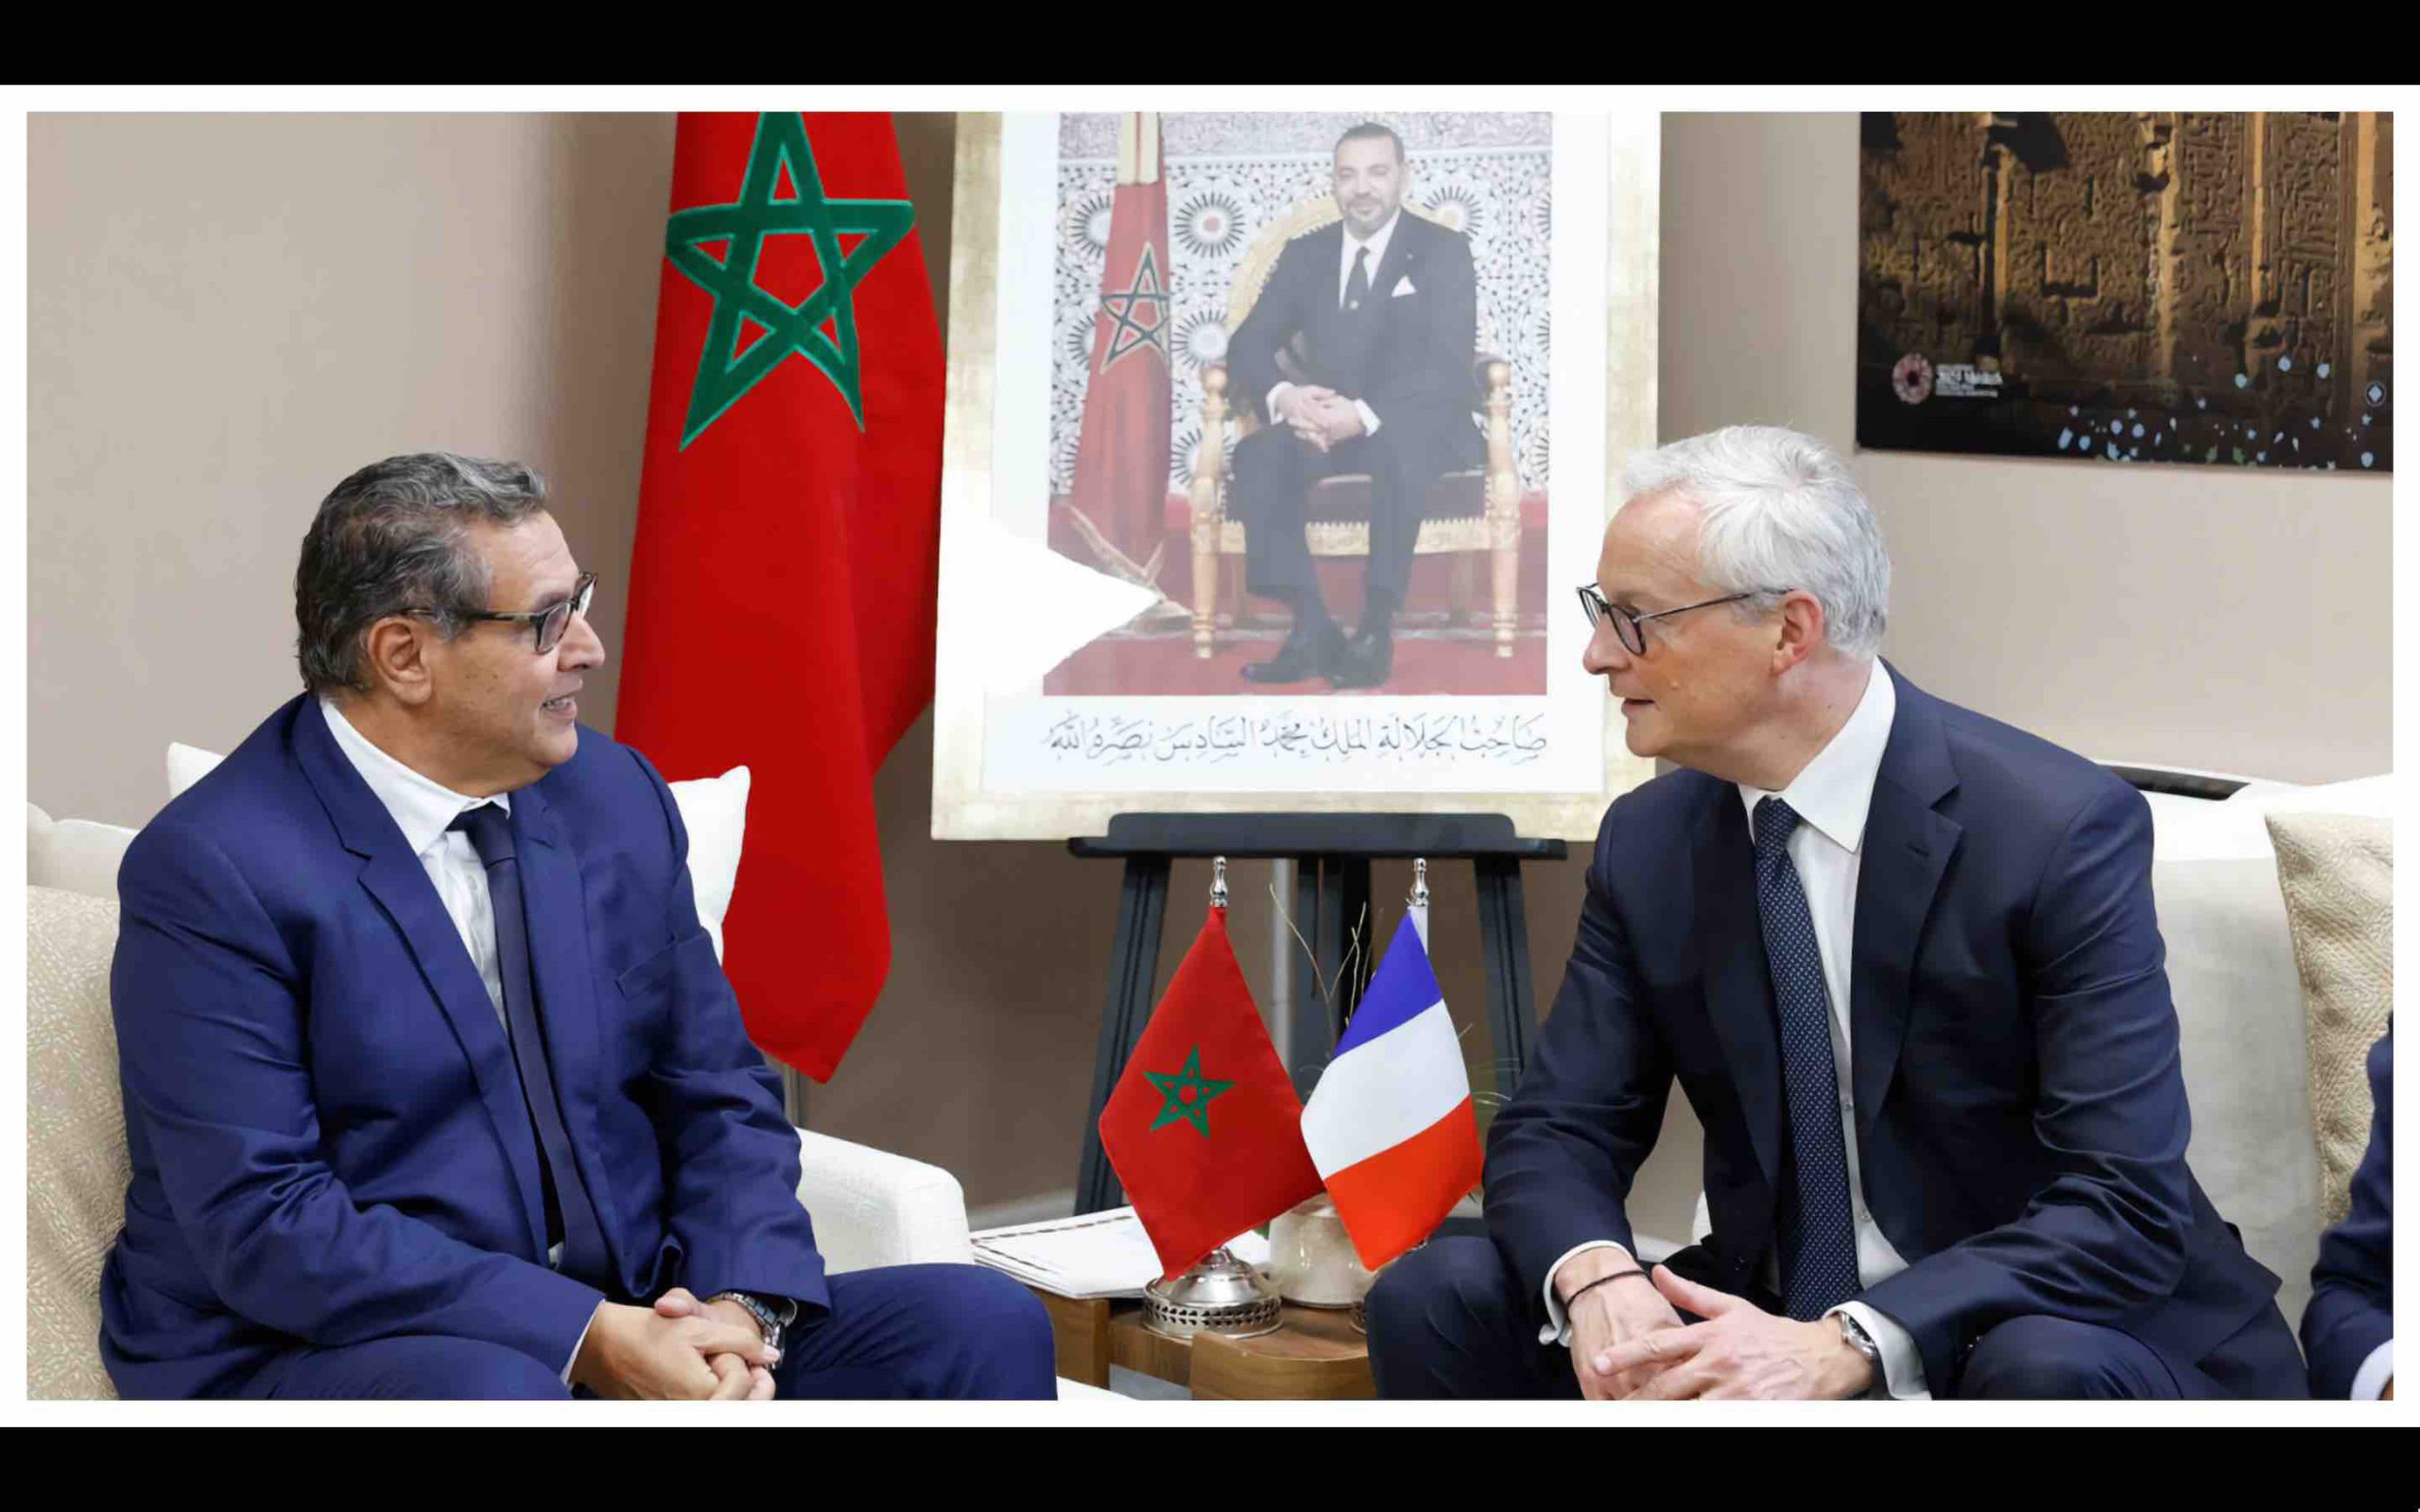 France Maroc Aziz Akhannouch Bruno Le Maire Morocco